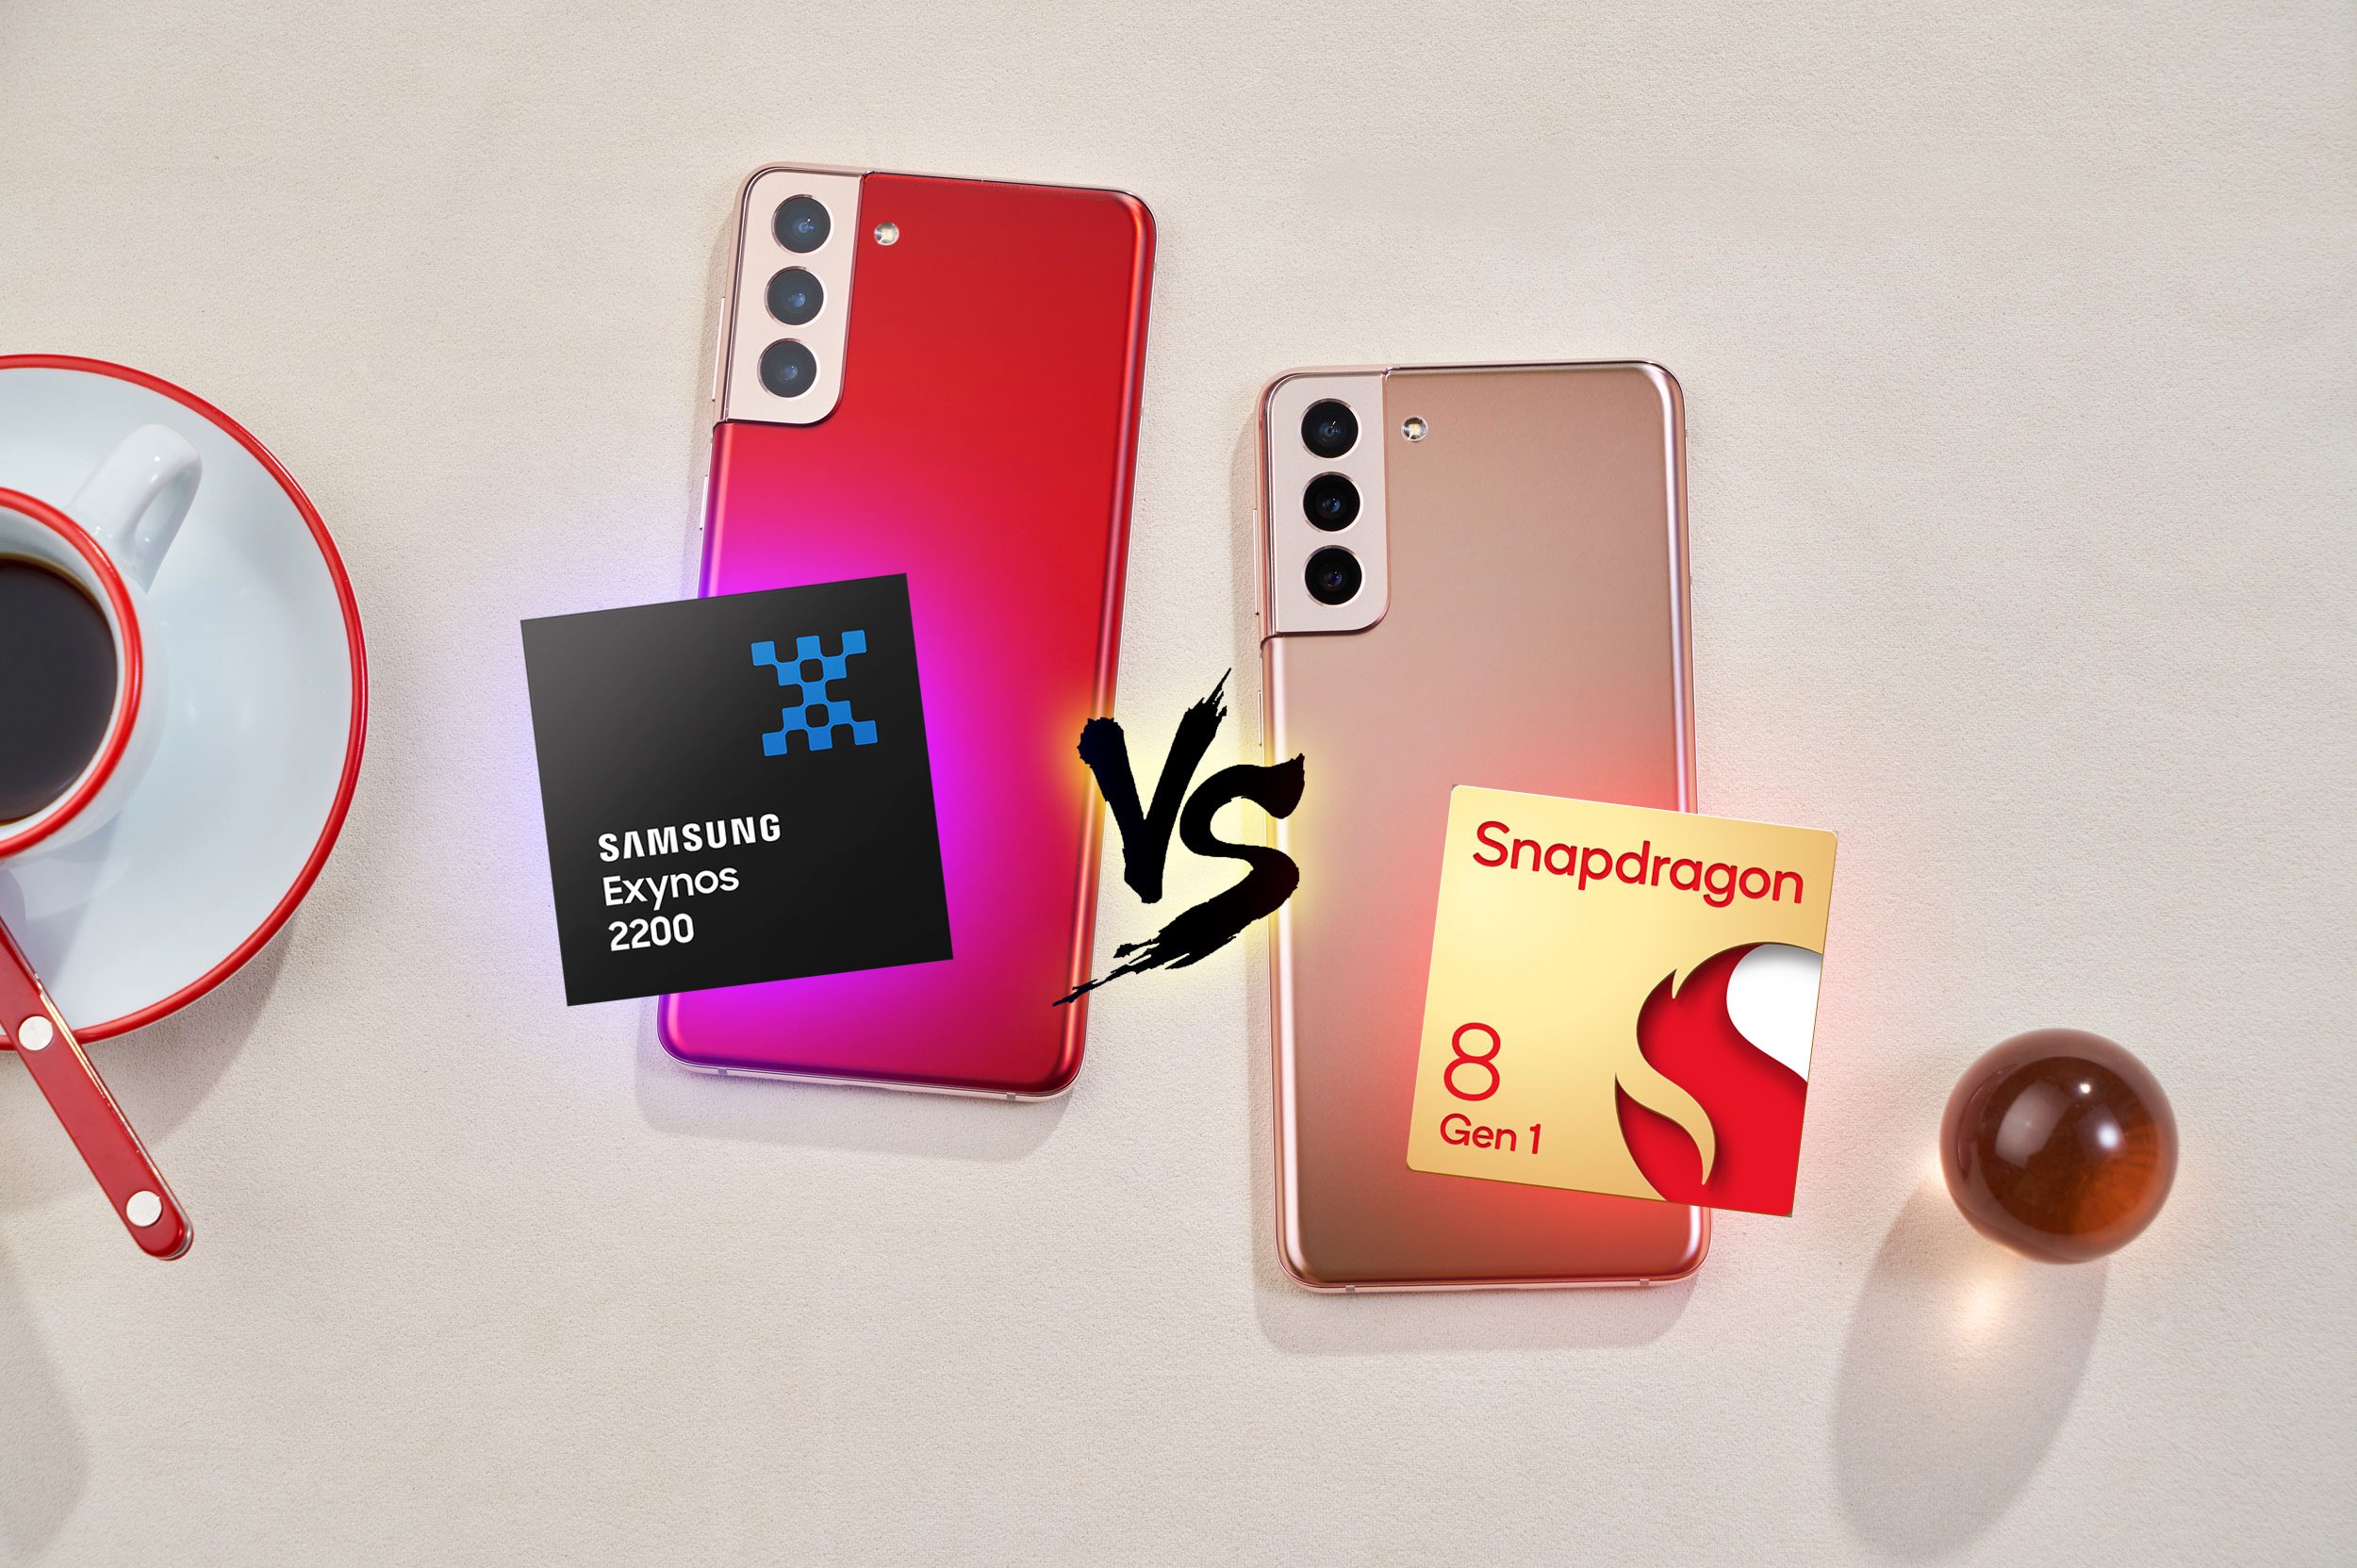 Samsung Snapdragon. Snapdragon 8 gen1 vs Snapdragon Exynos 2200.